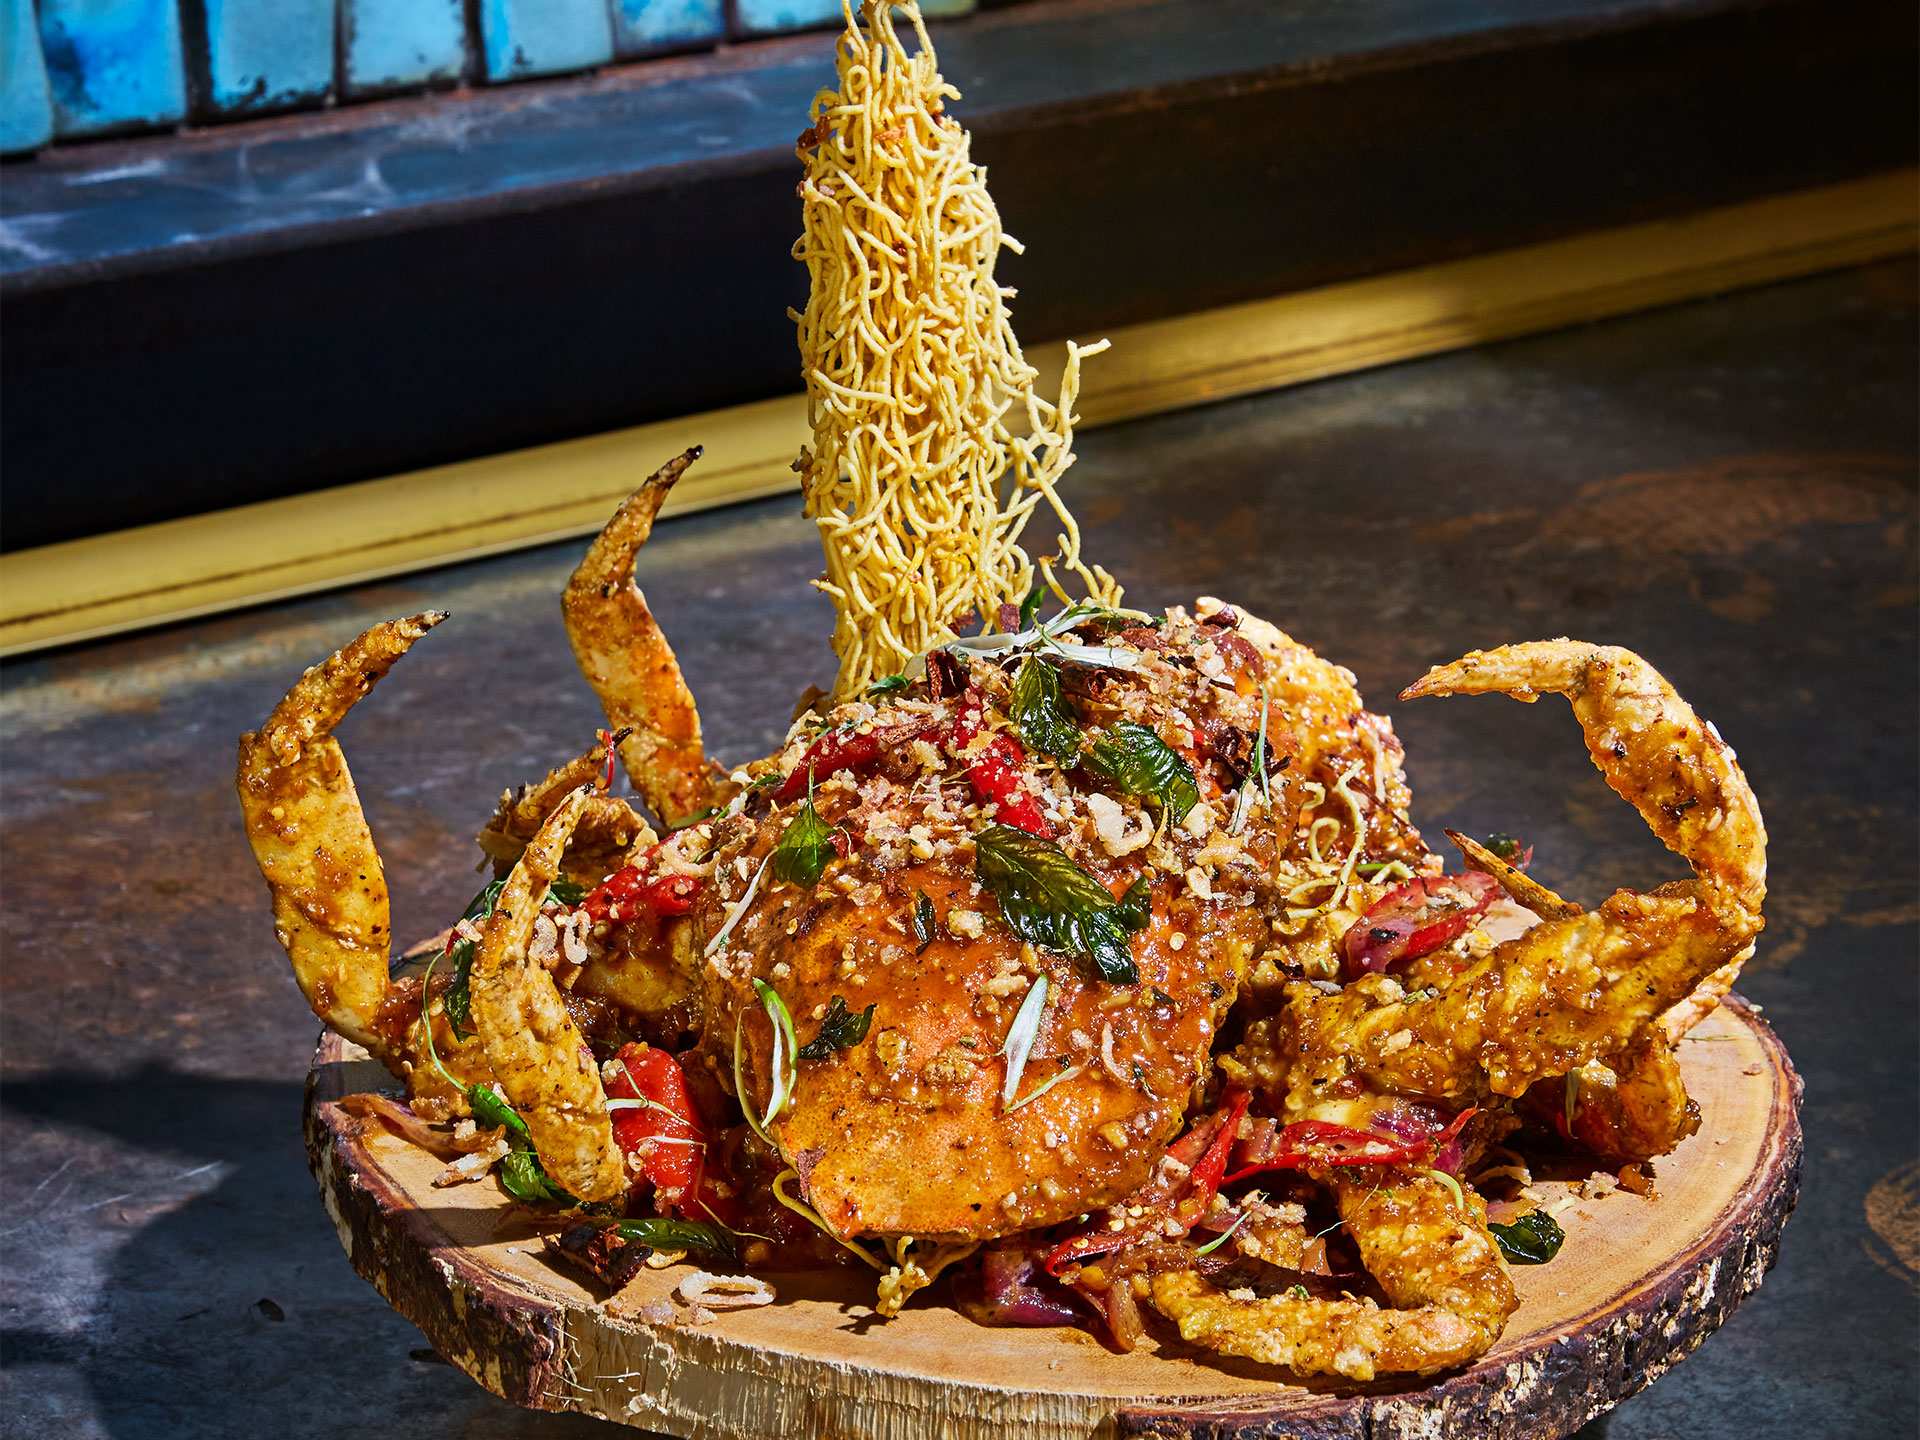 Best restaurants Toronto | Singapore Chili Crab at DaiLo